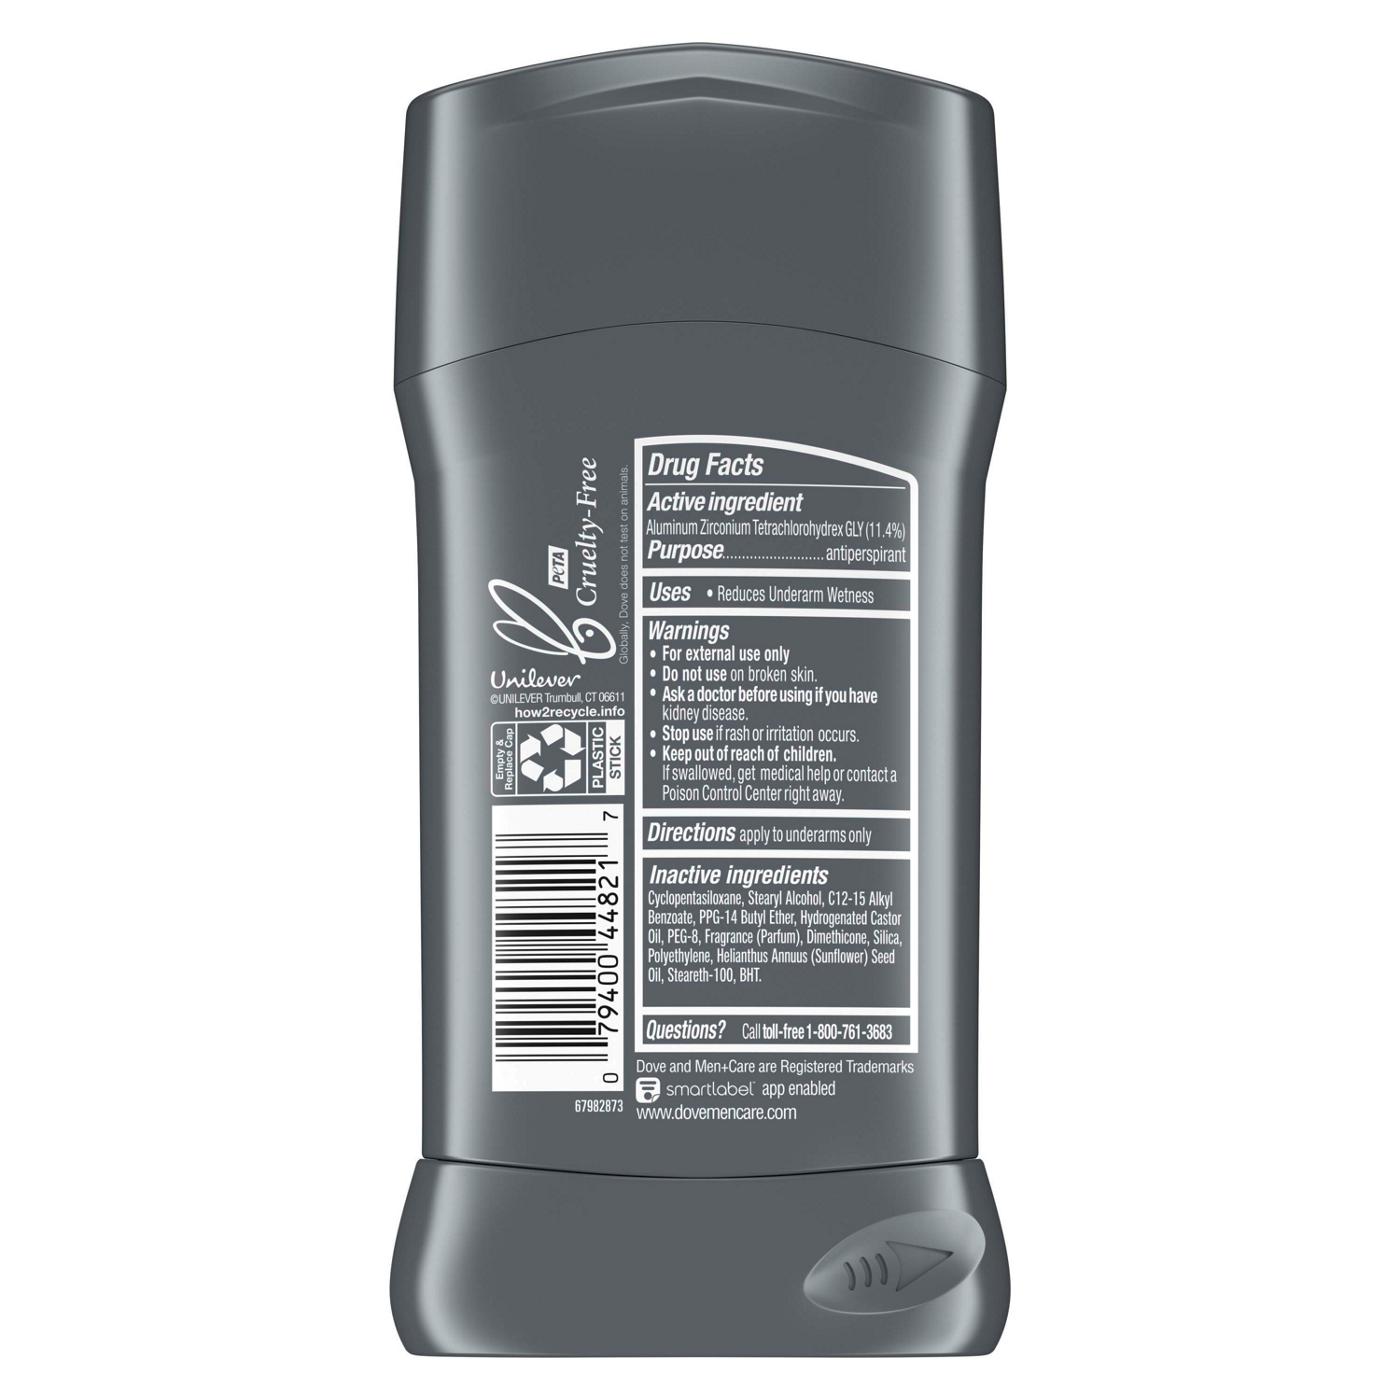 Dove Men+Care Antiperspirant Deodorant Stain Defense Cool; image 3 of 3